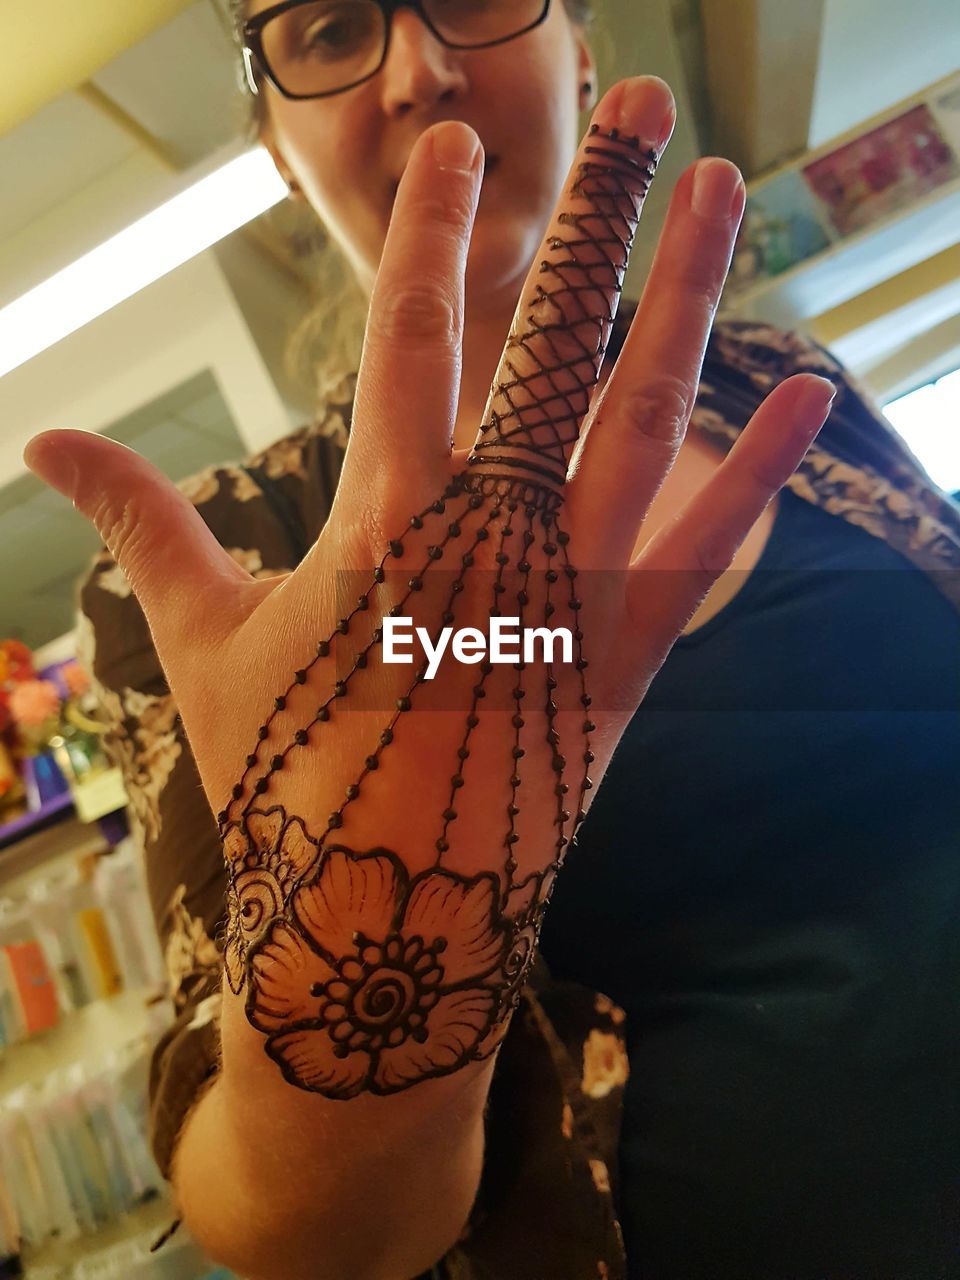 Woman showing henna tattoo